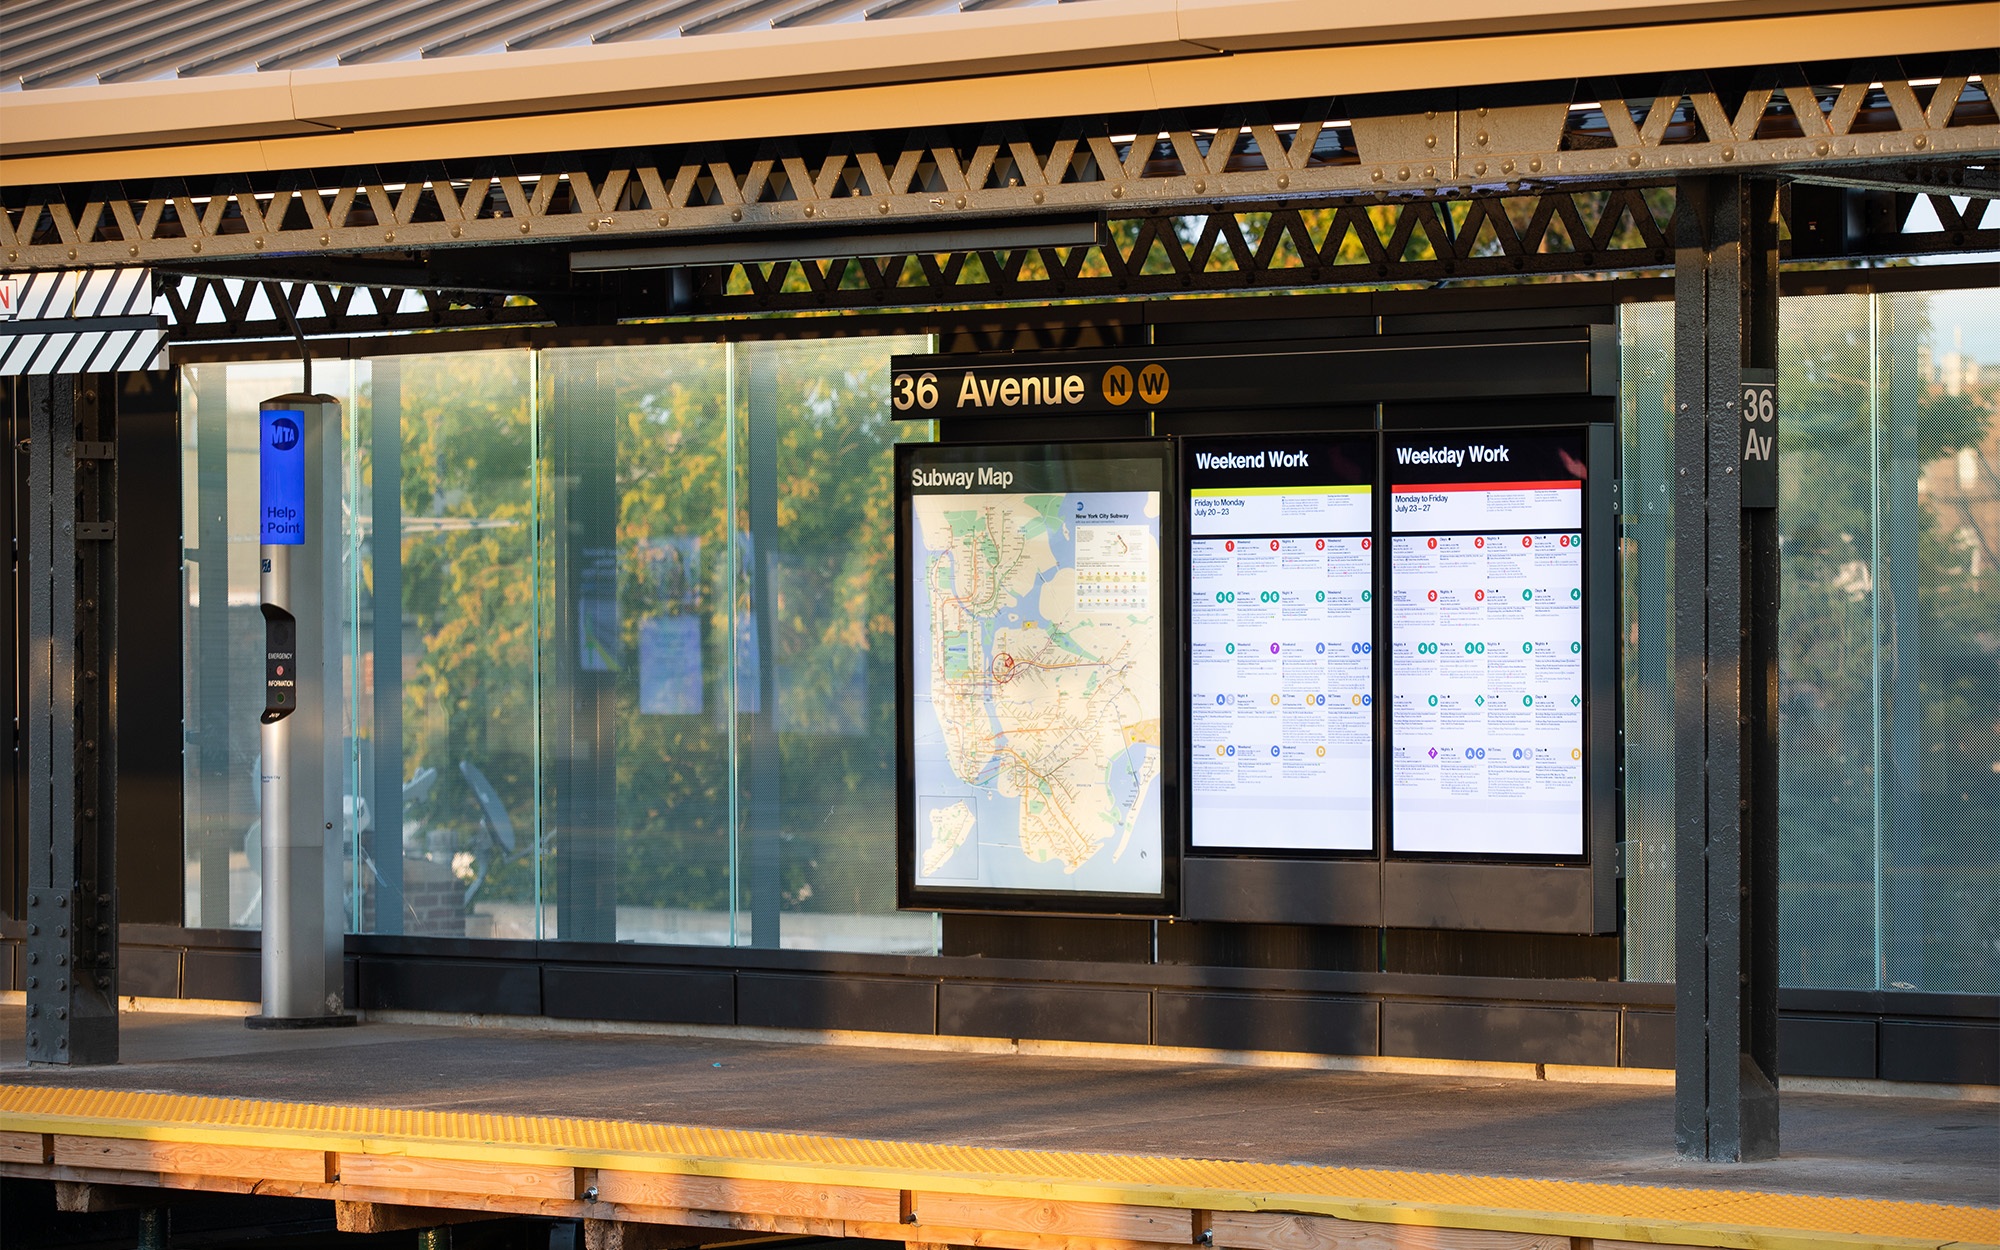 Astoria subway station platform with digital information panels.